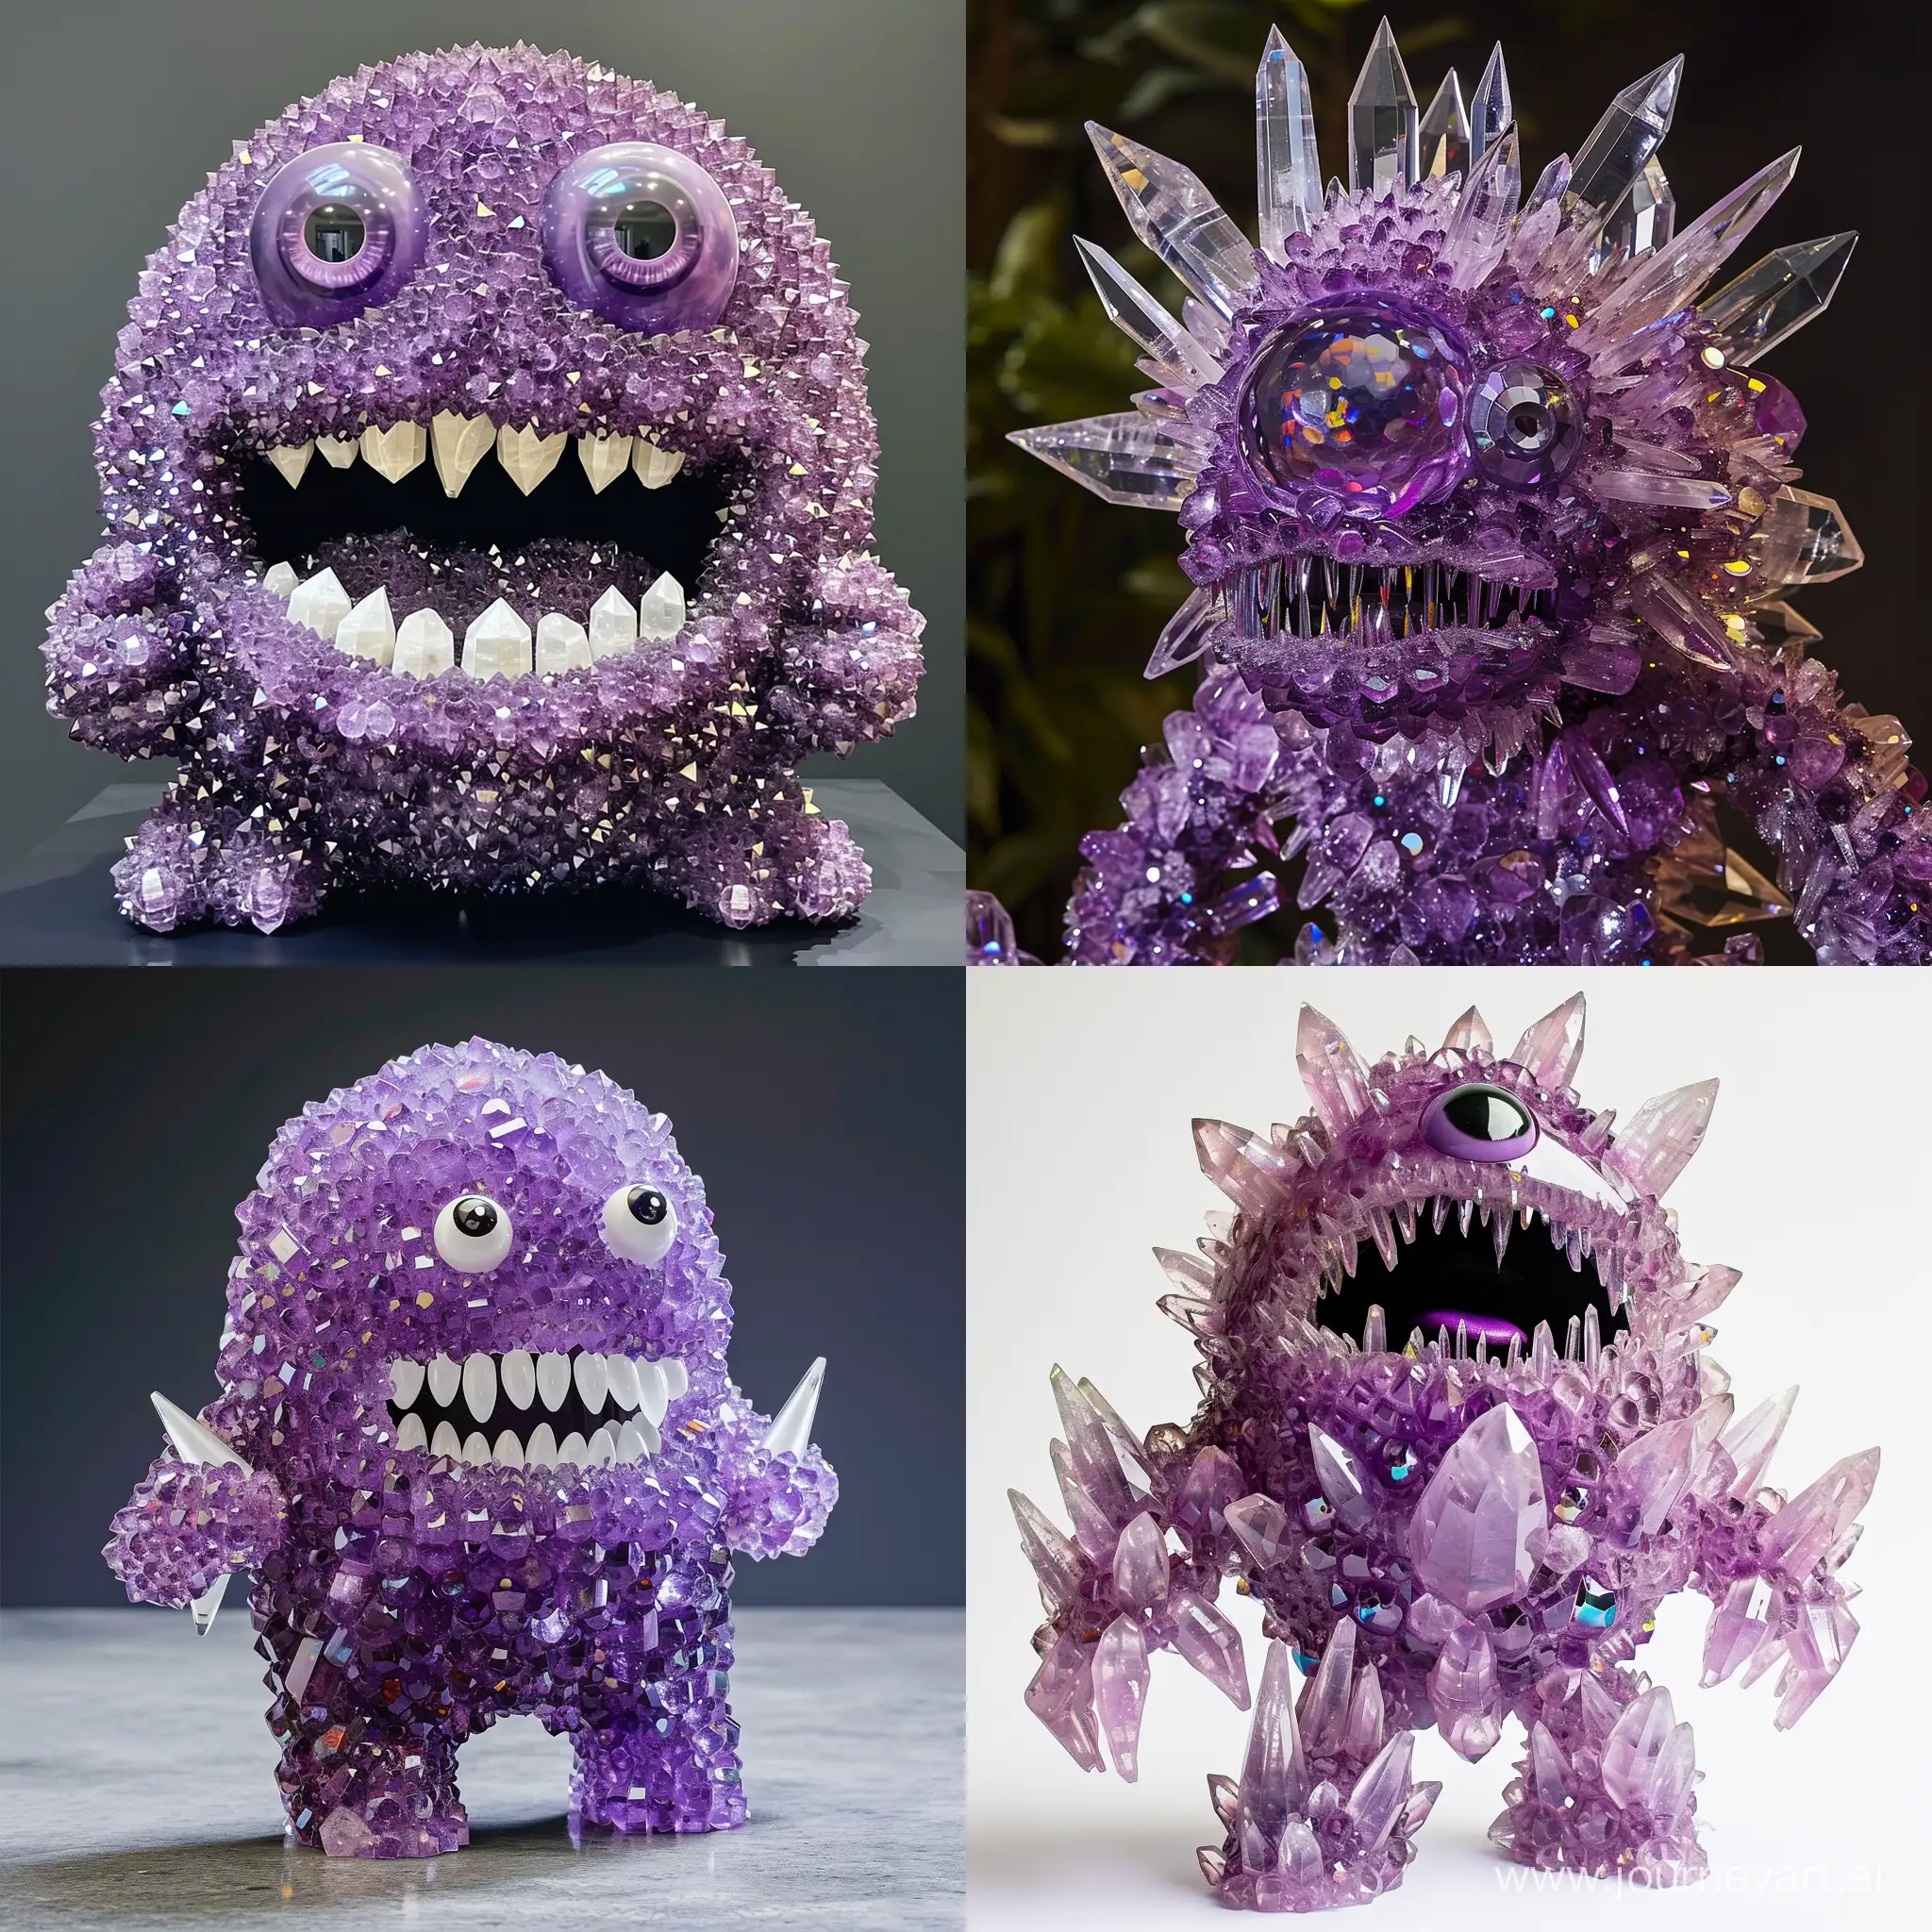 Enchanting-Crystal-Monster-in-Vibrant-Purple-Hues